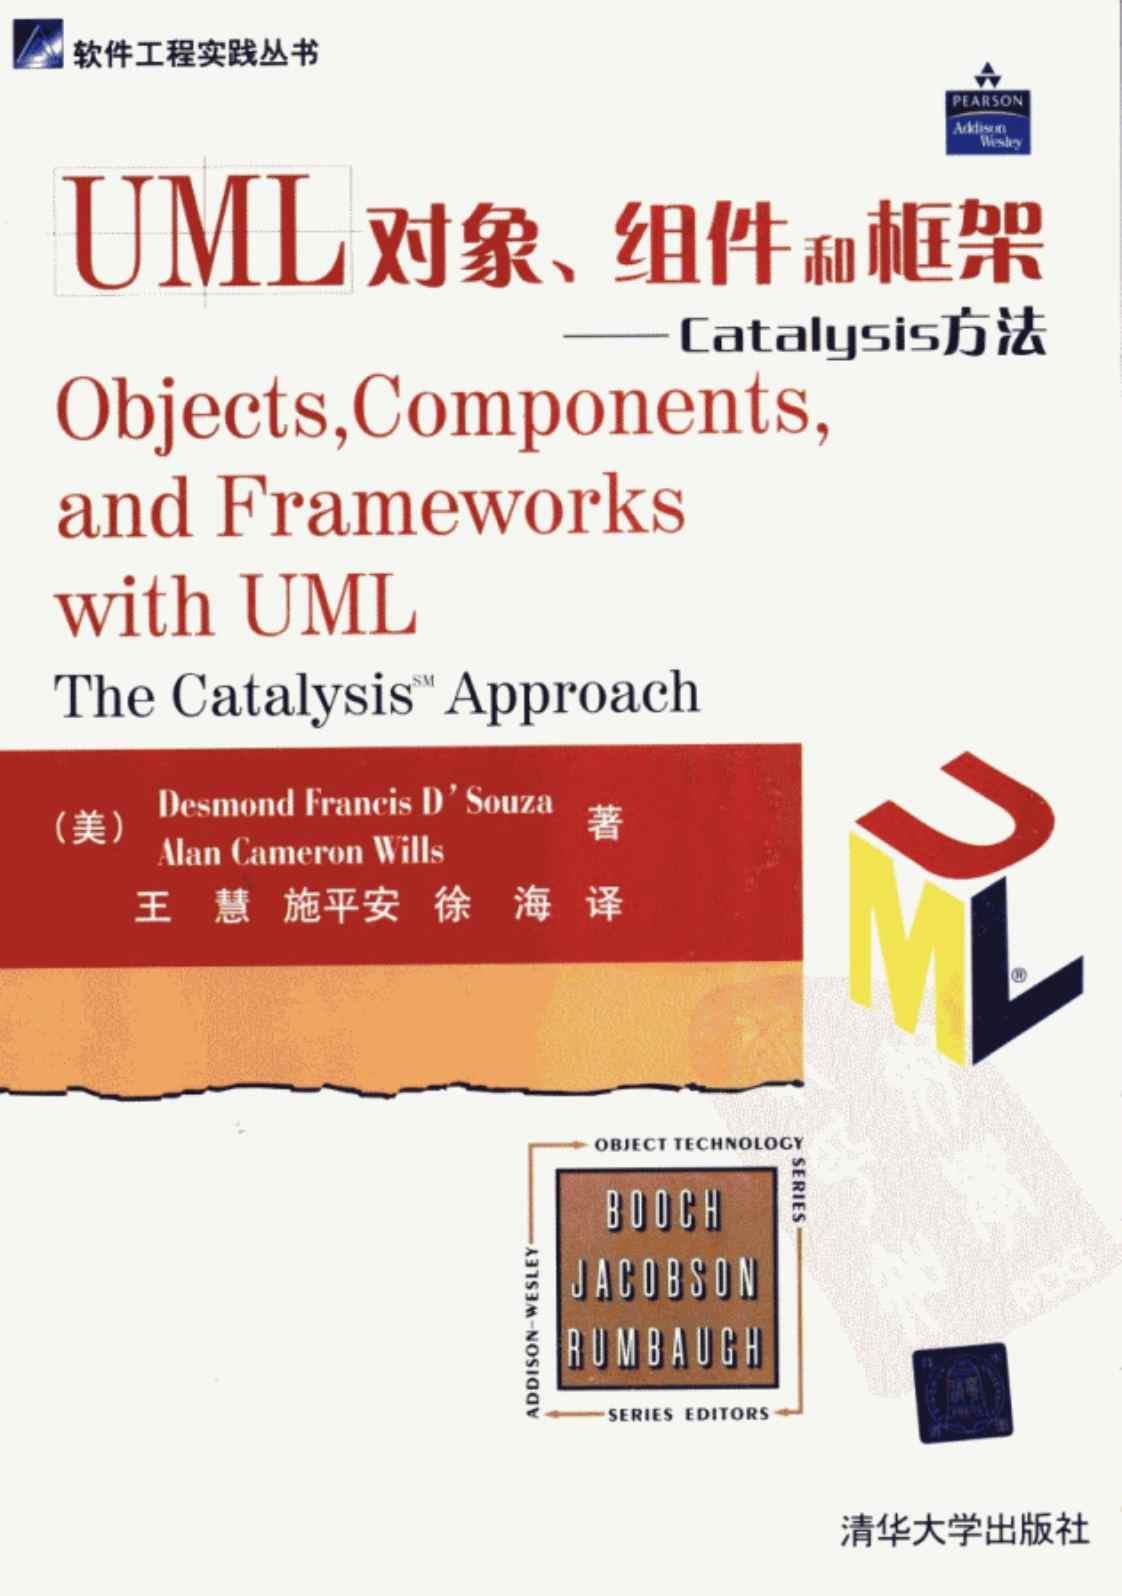 [UML对象、组件和框架——Catalysis方法][德苏热(著)]高清PDF电子书